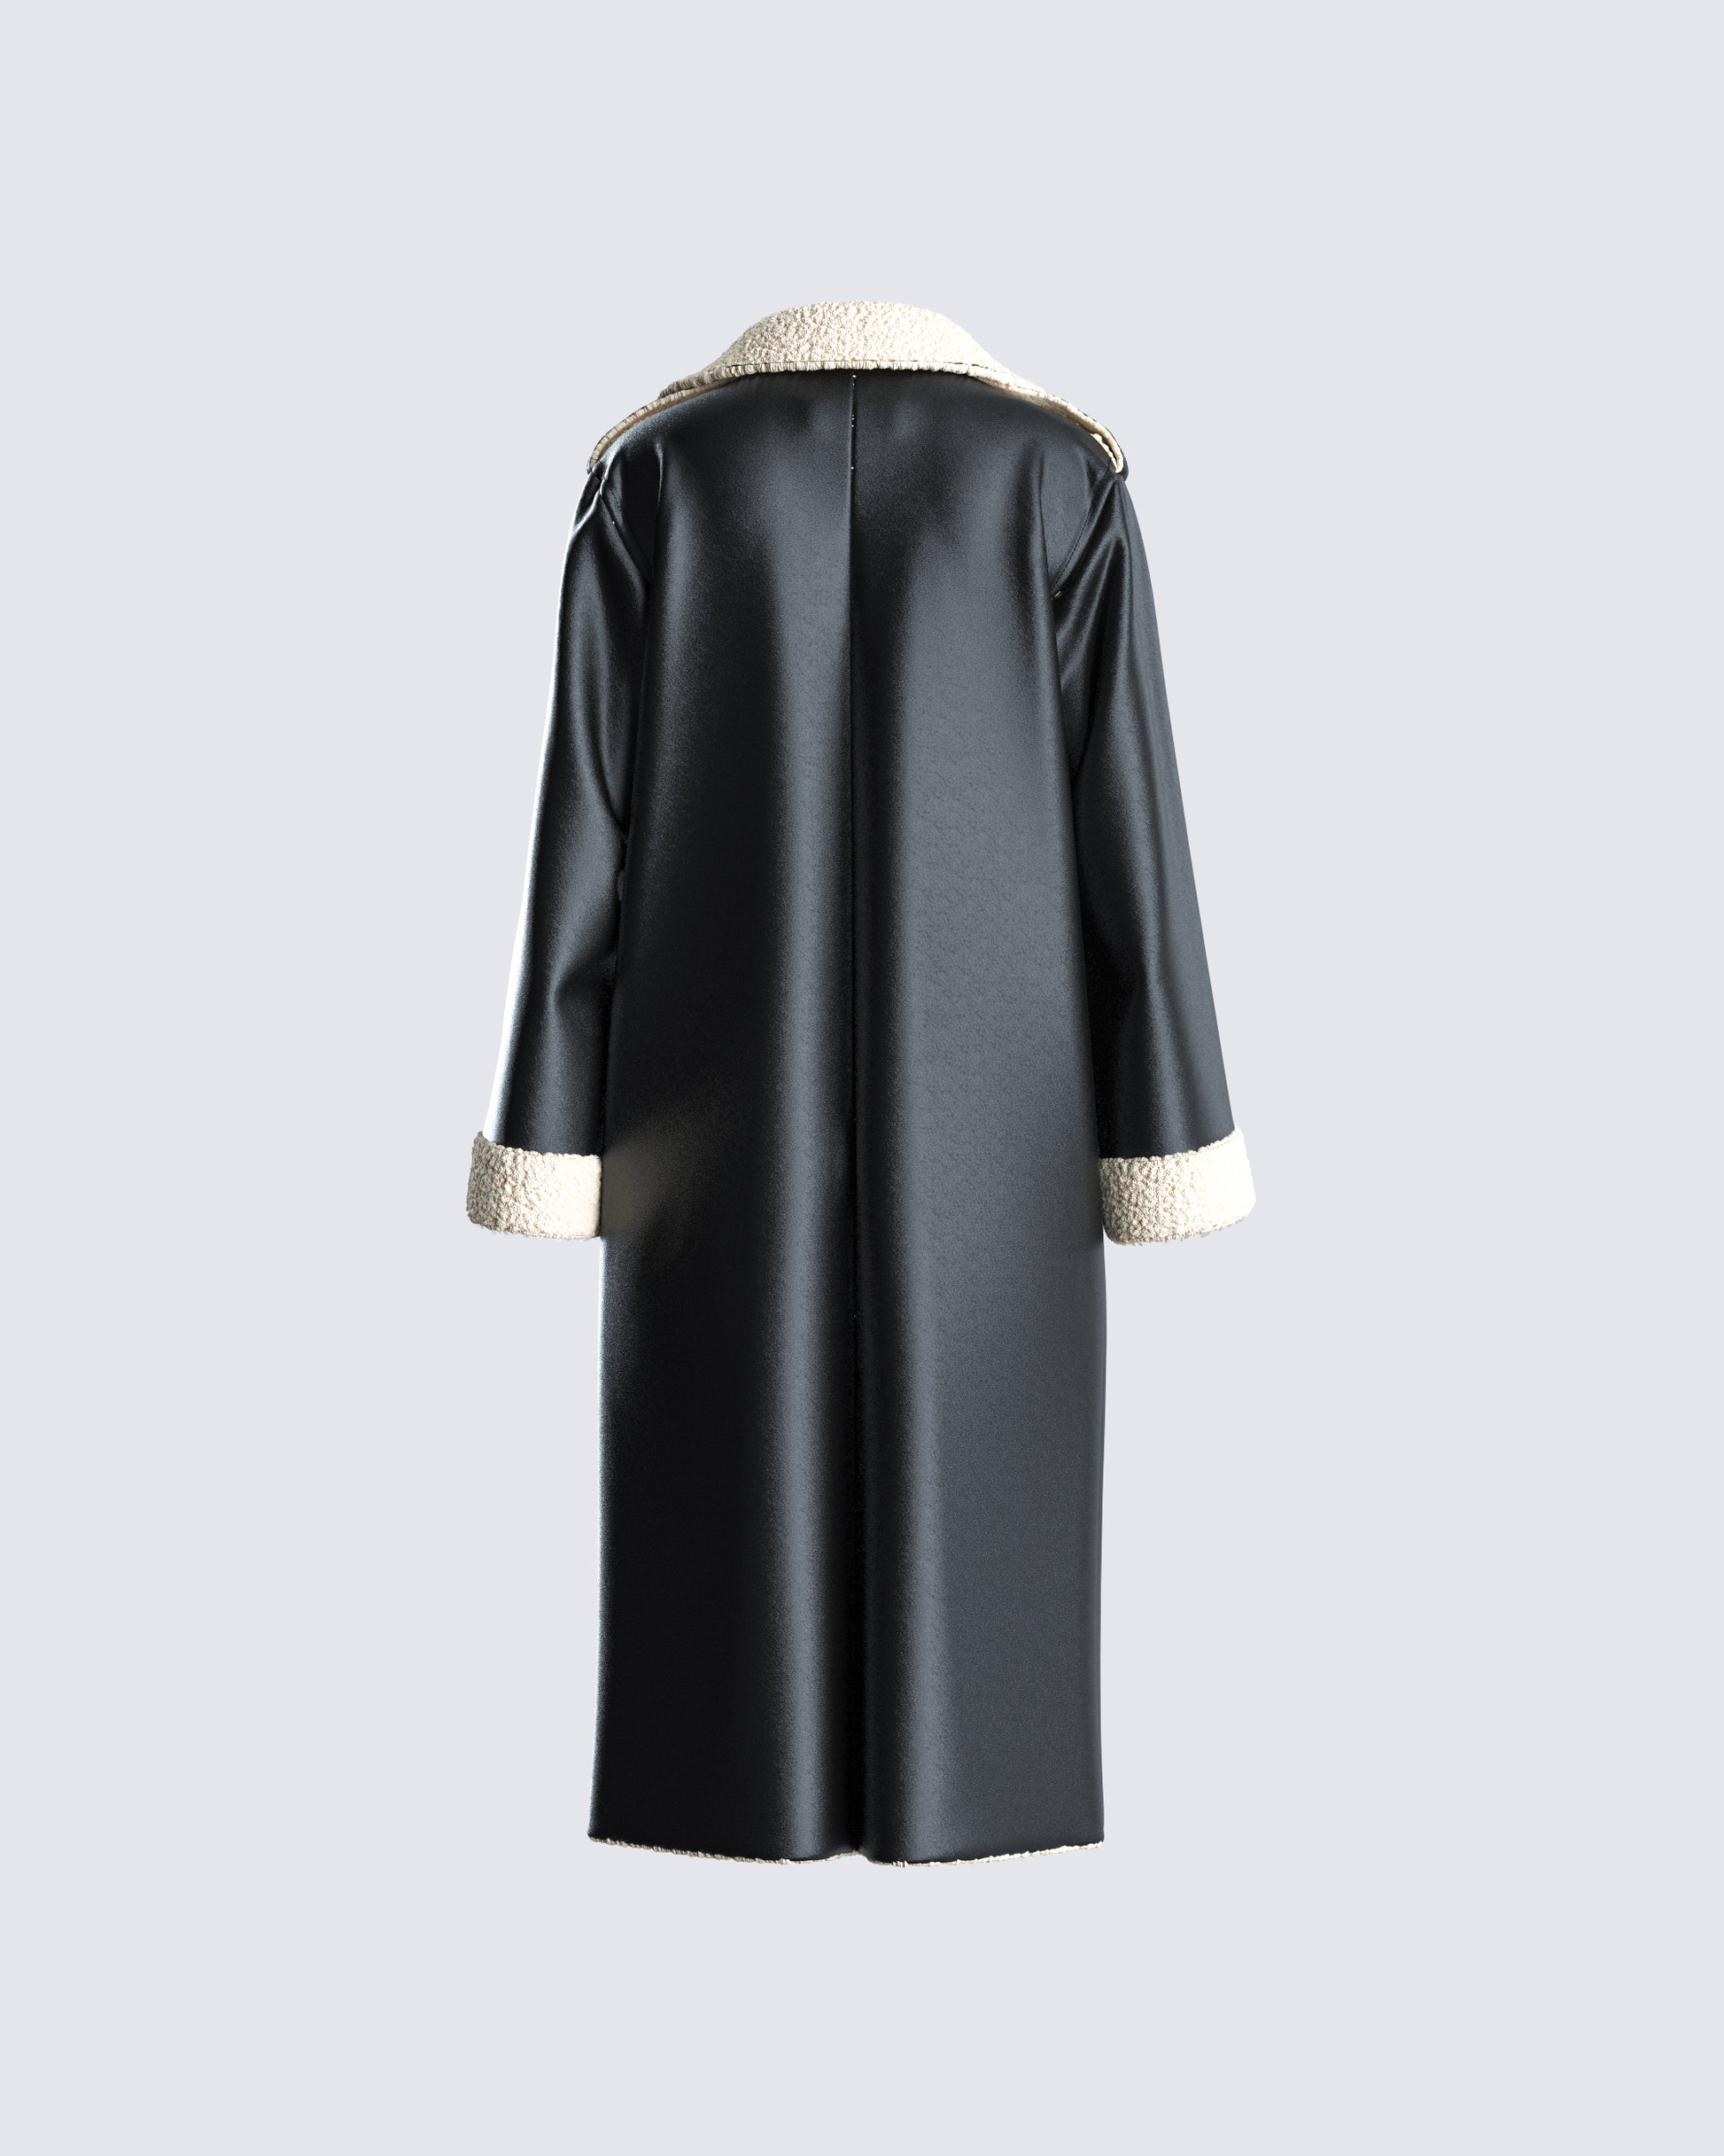 Yoly Black Vegan Leather Coat  Leather coat, Clothes, Yellow mini